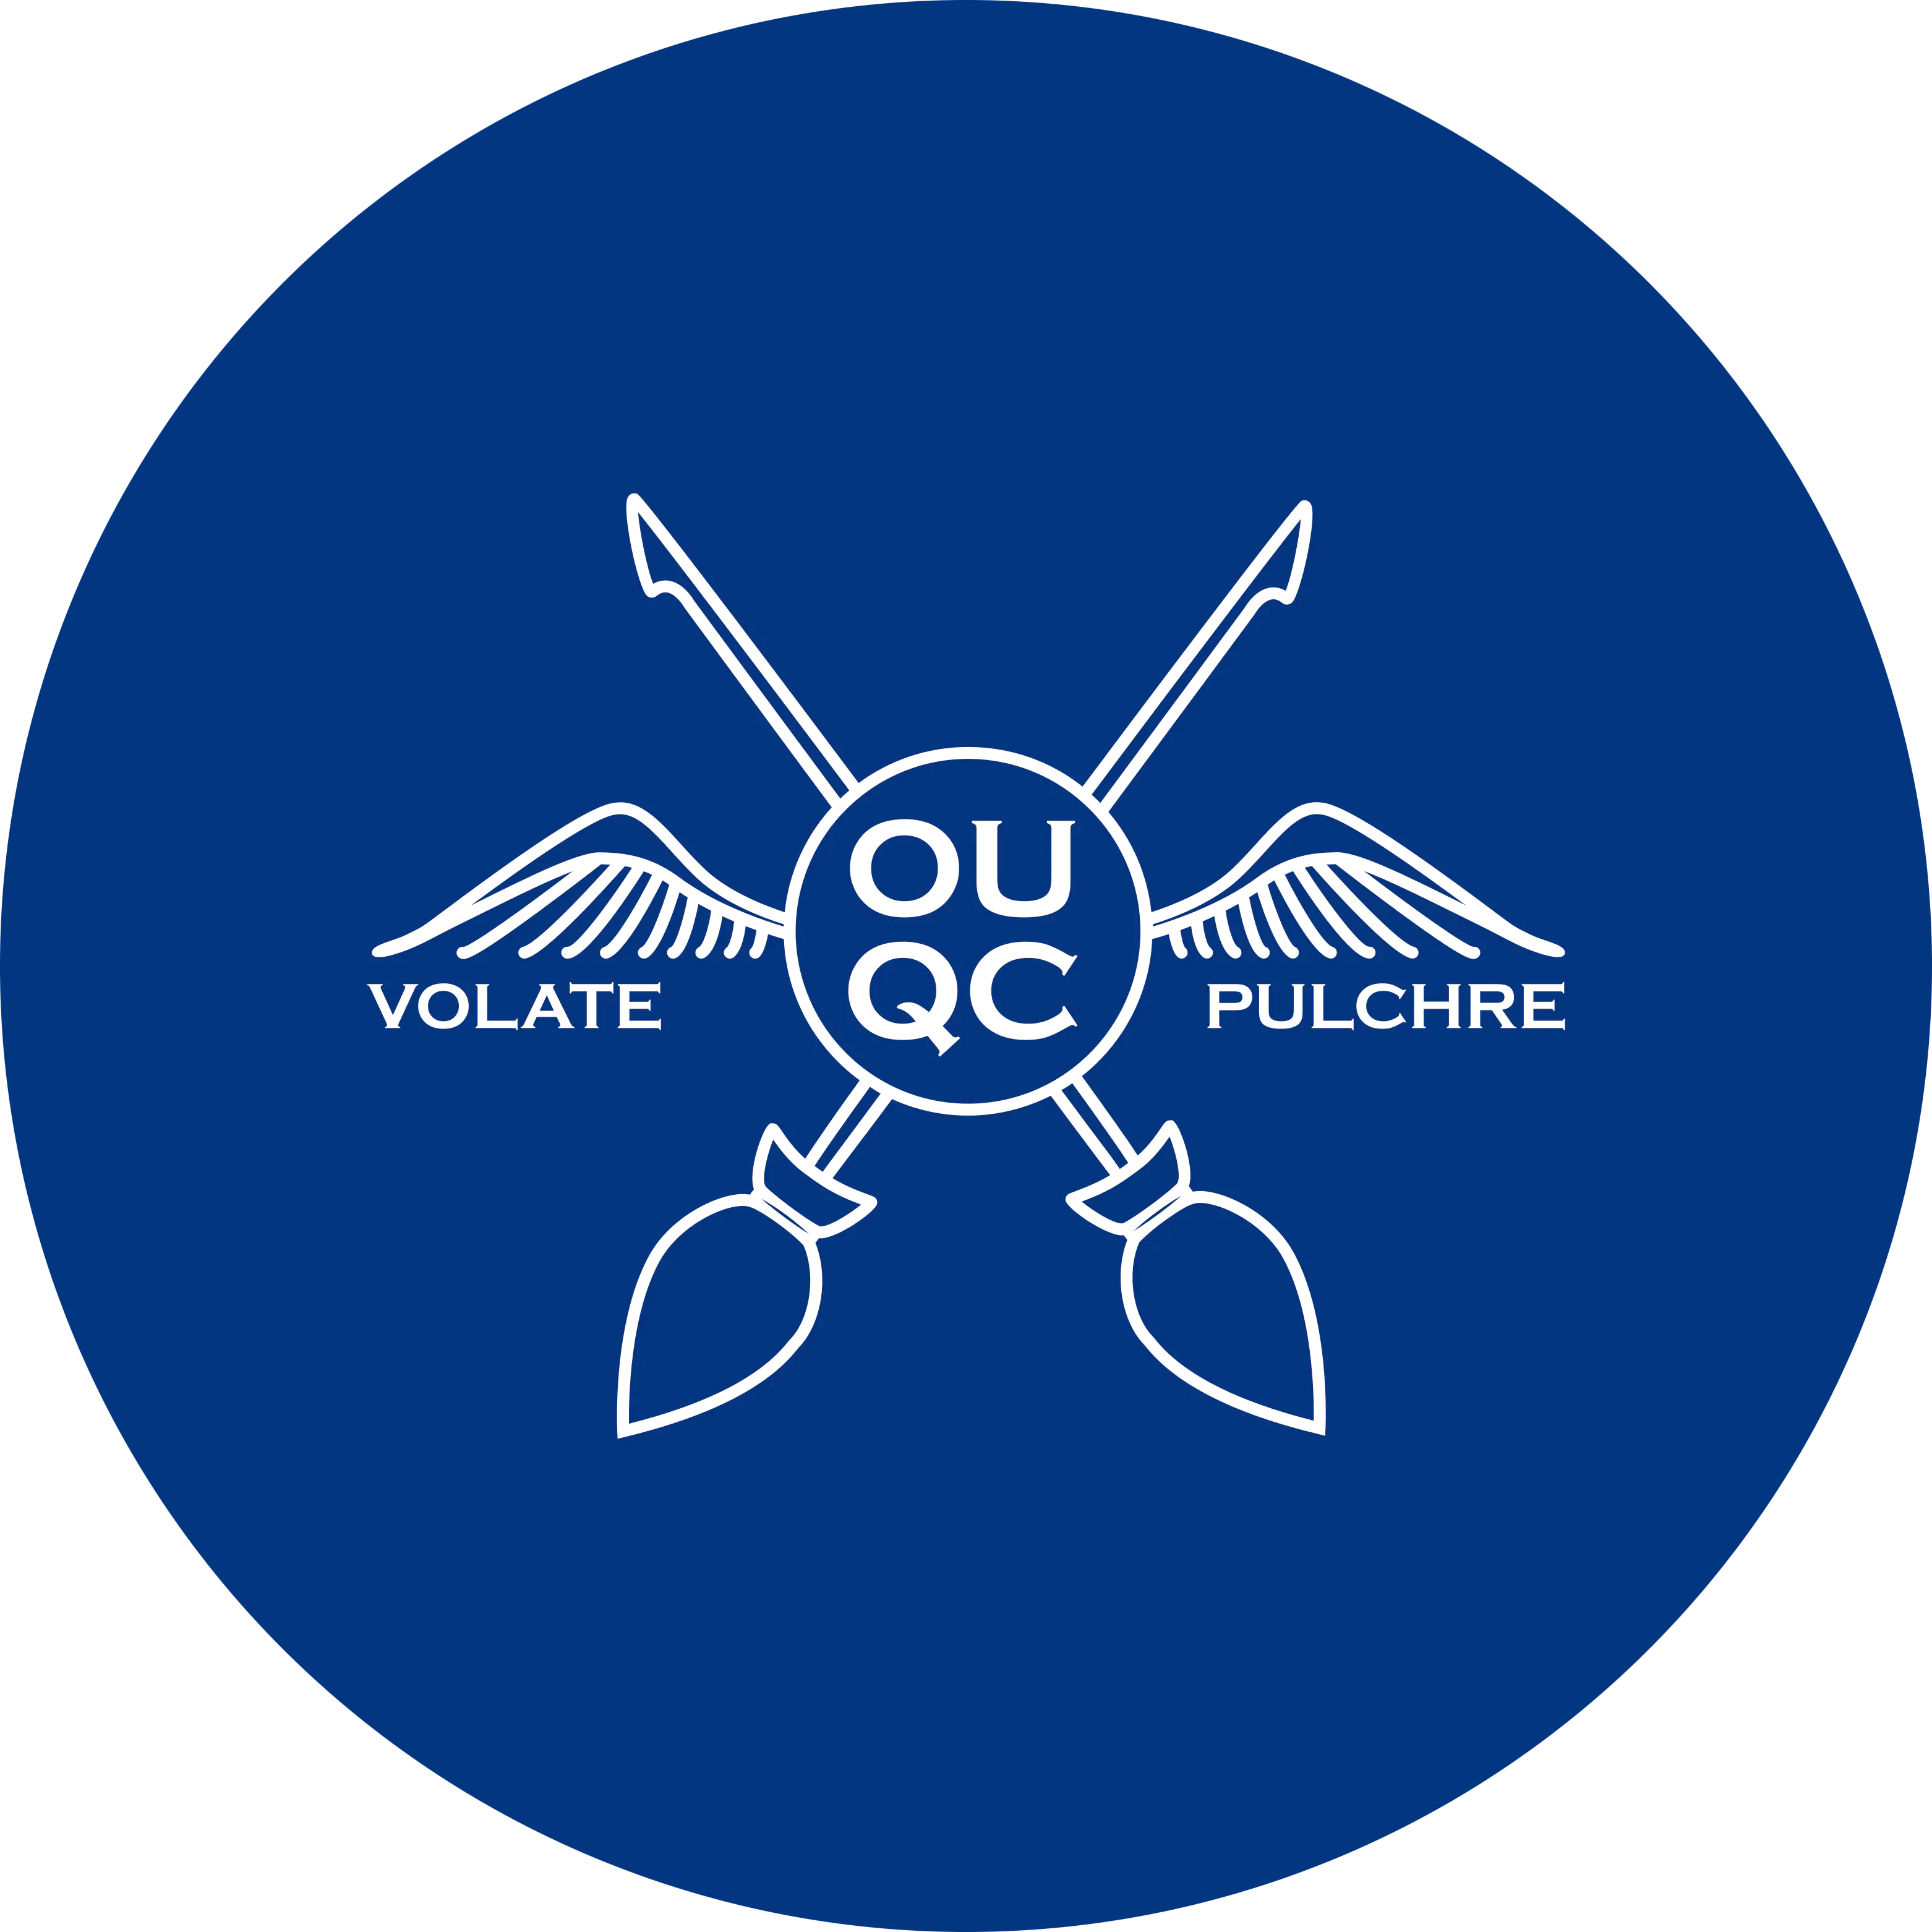 Oxford Universities Quidditch Club logo